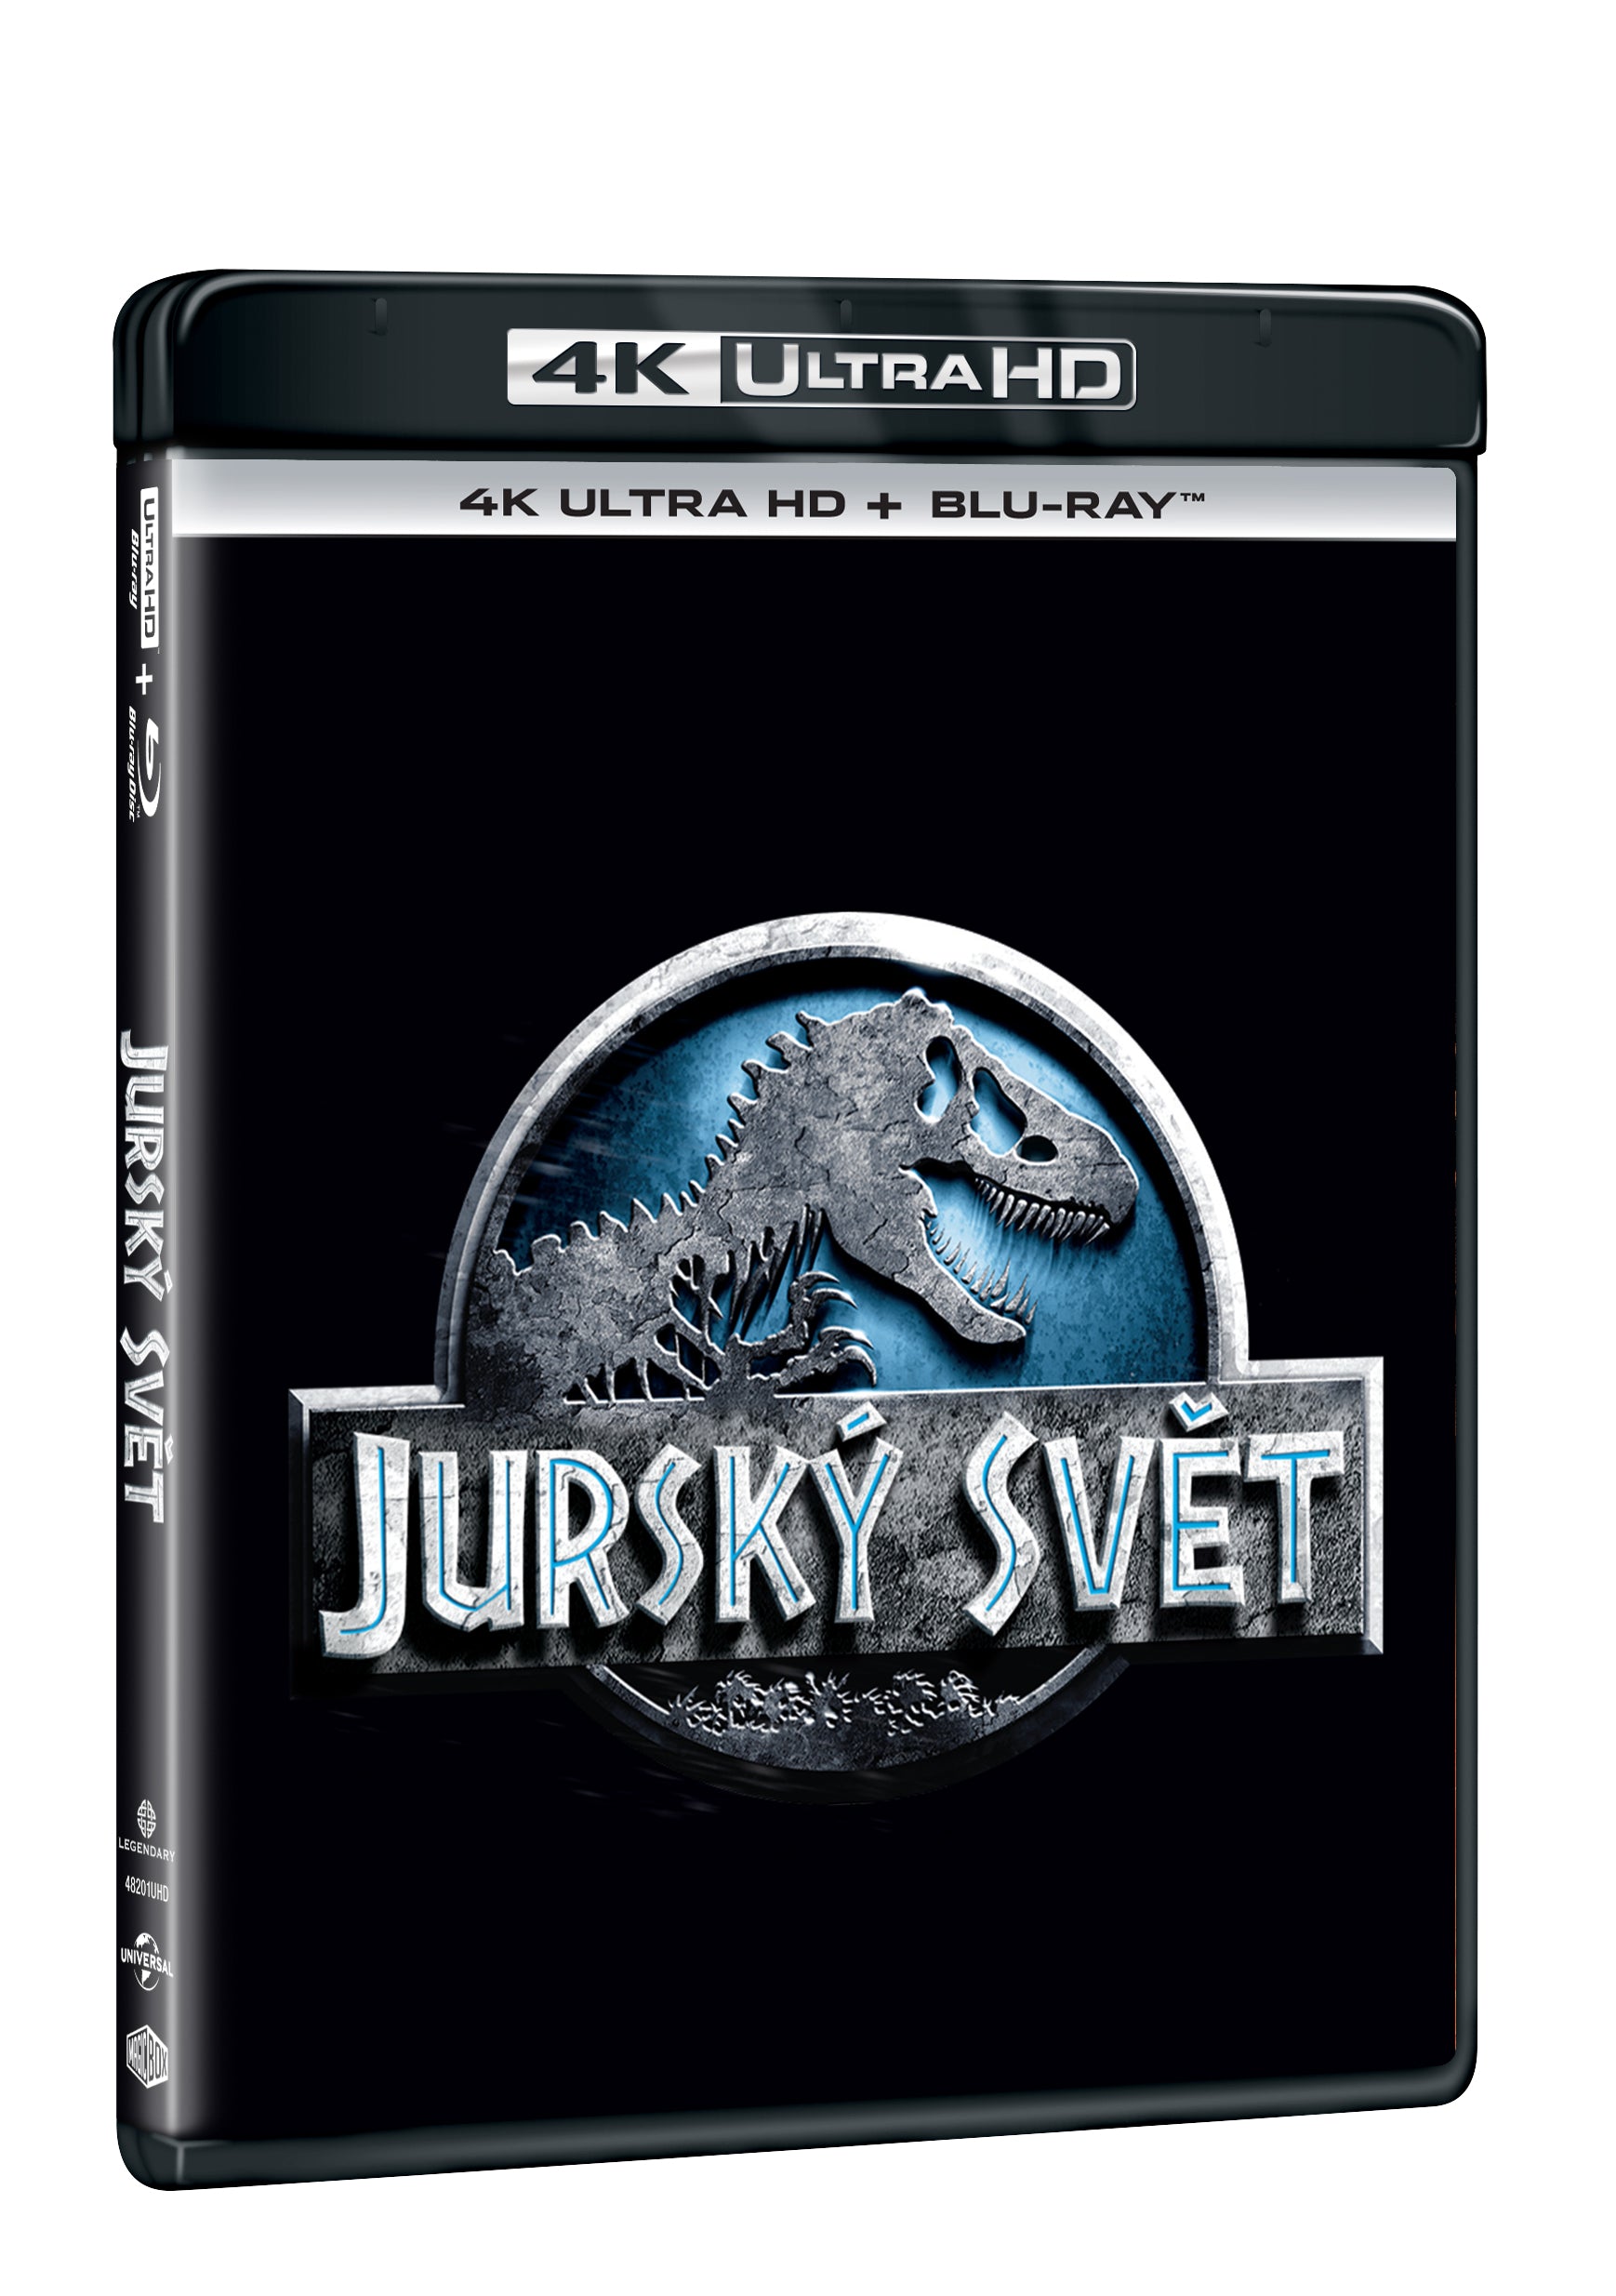 Jursky svet 2BD (UHD+BD) / Jurassic World (2015) - Czech version